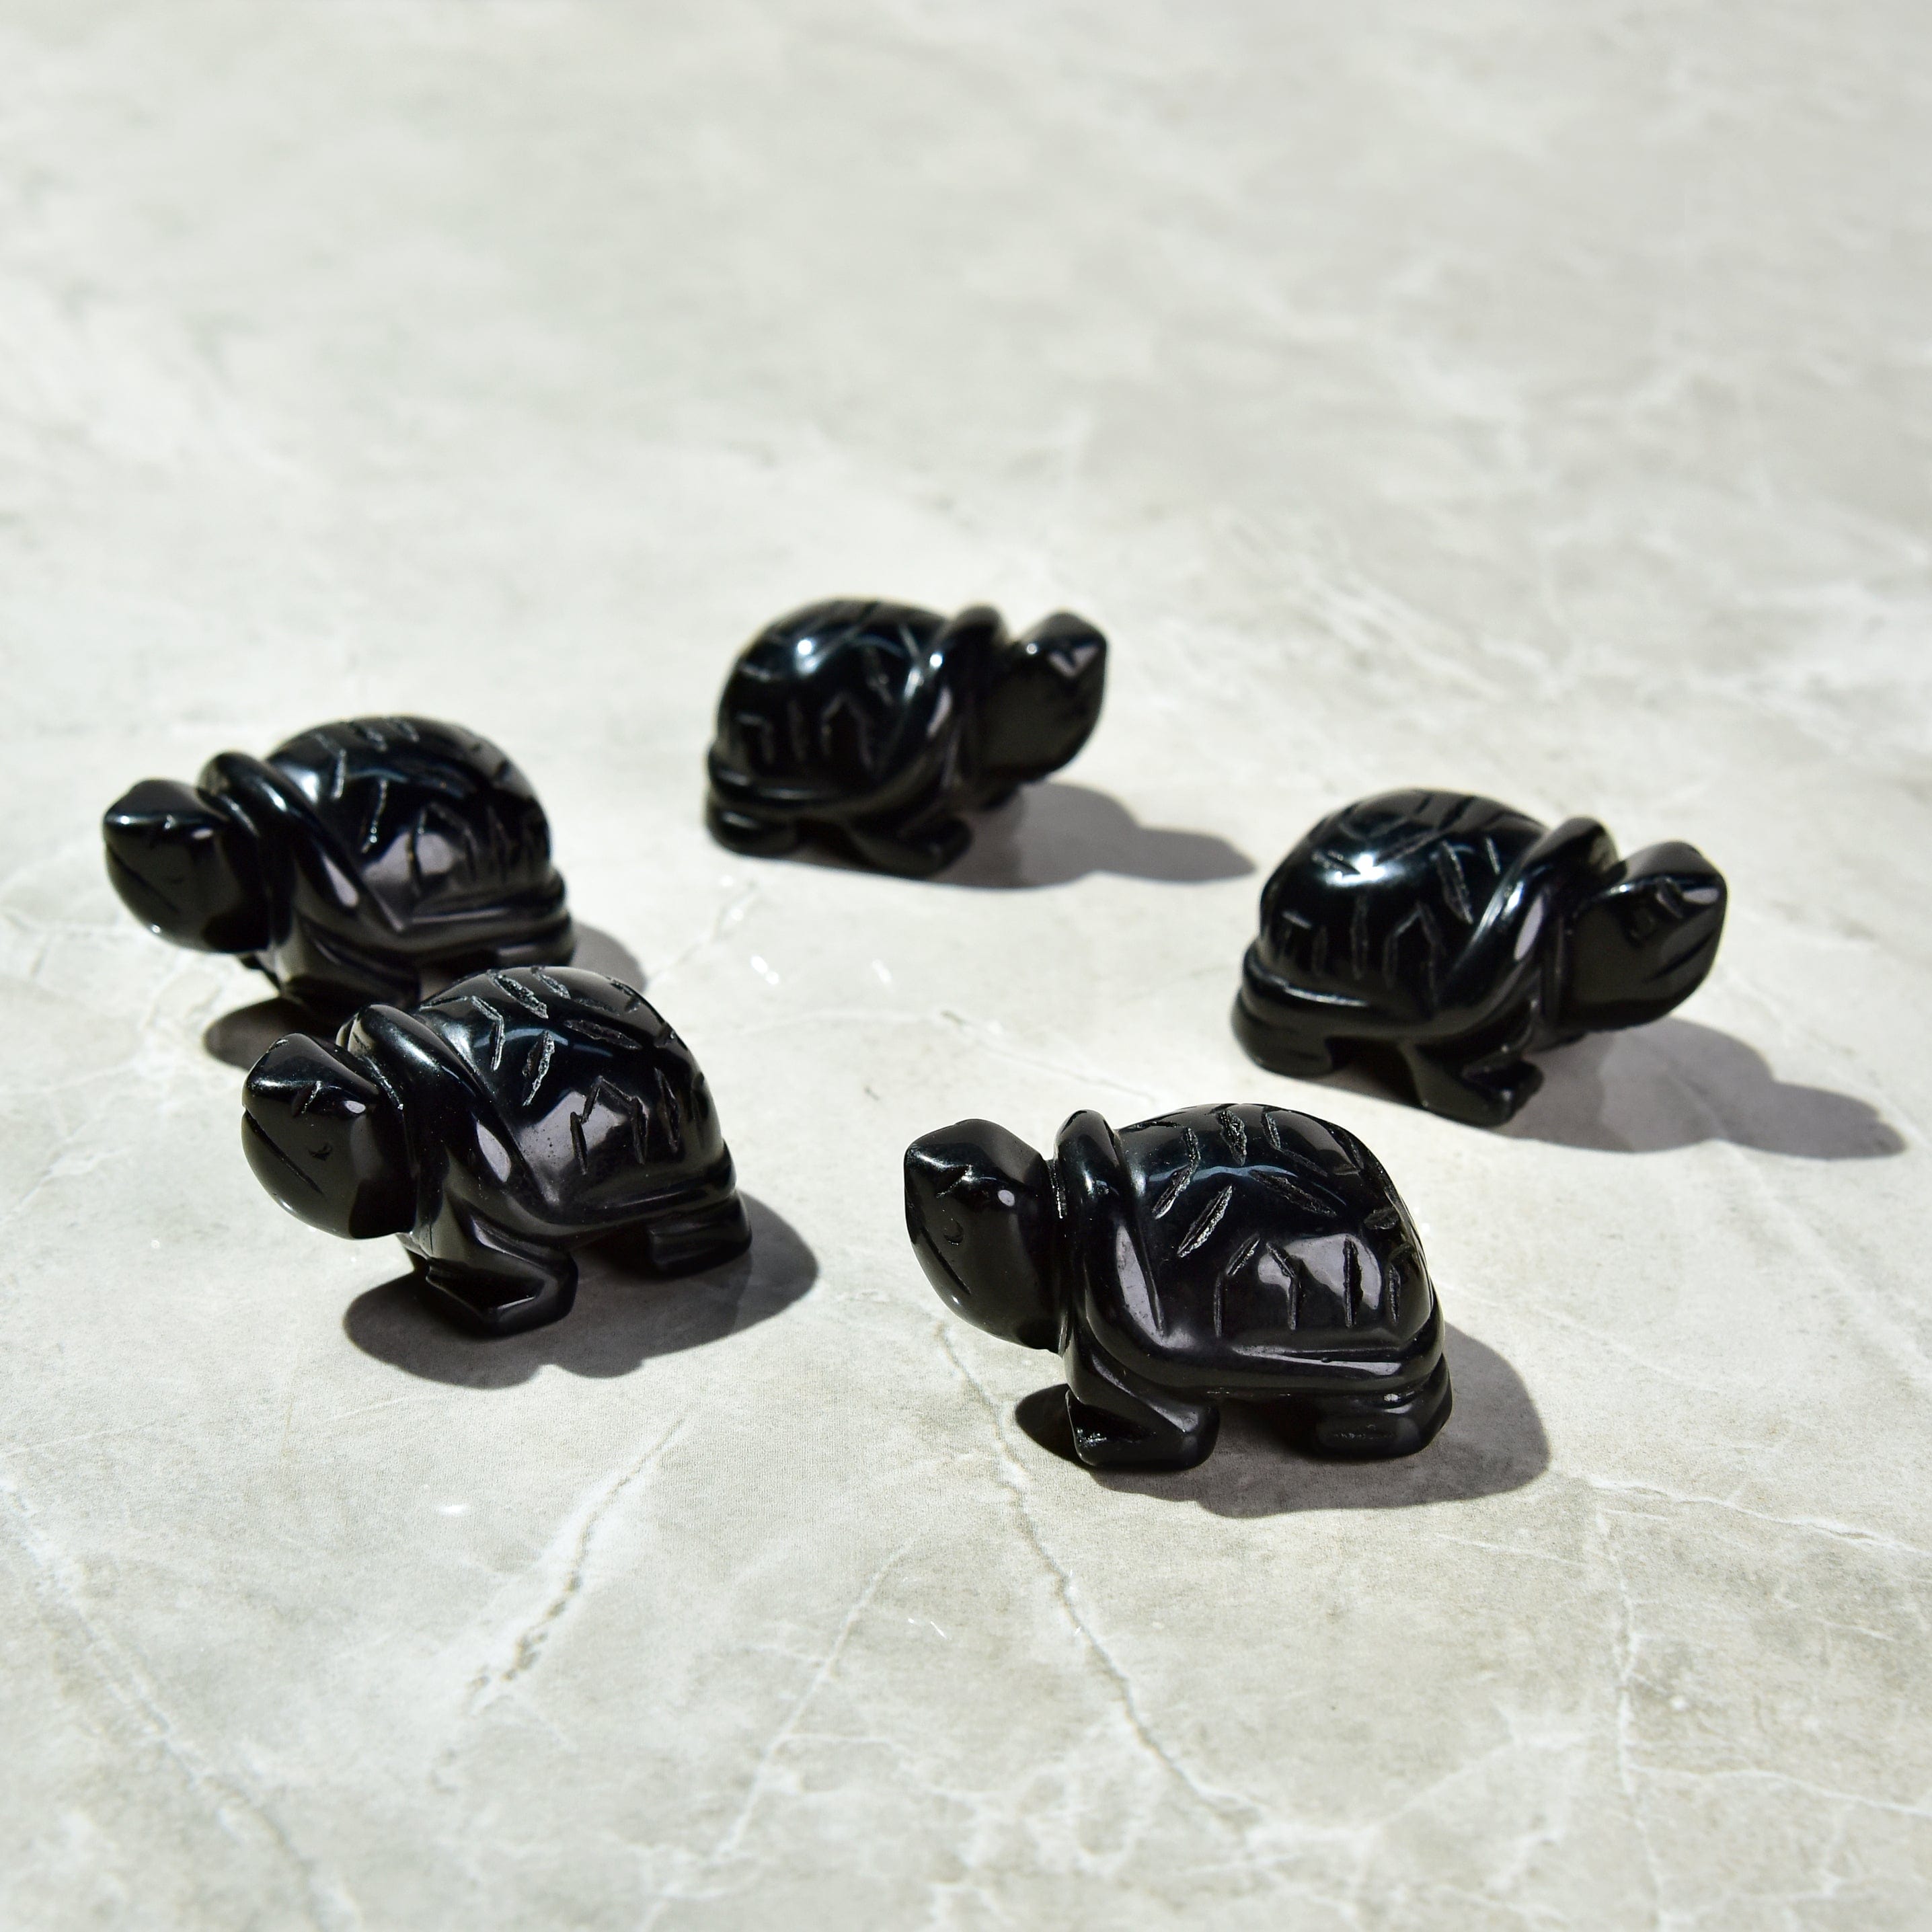 KALIFANO Gemstone Carvings 2" Obsidian Turtle Natural Gemstone Carving CV14-T-OB